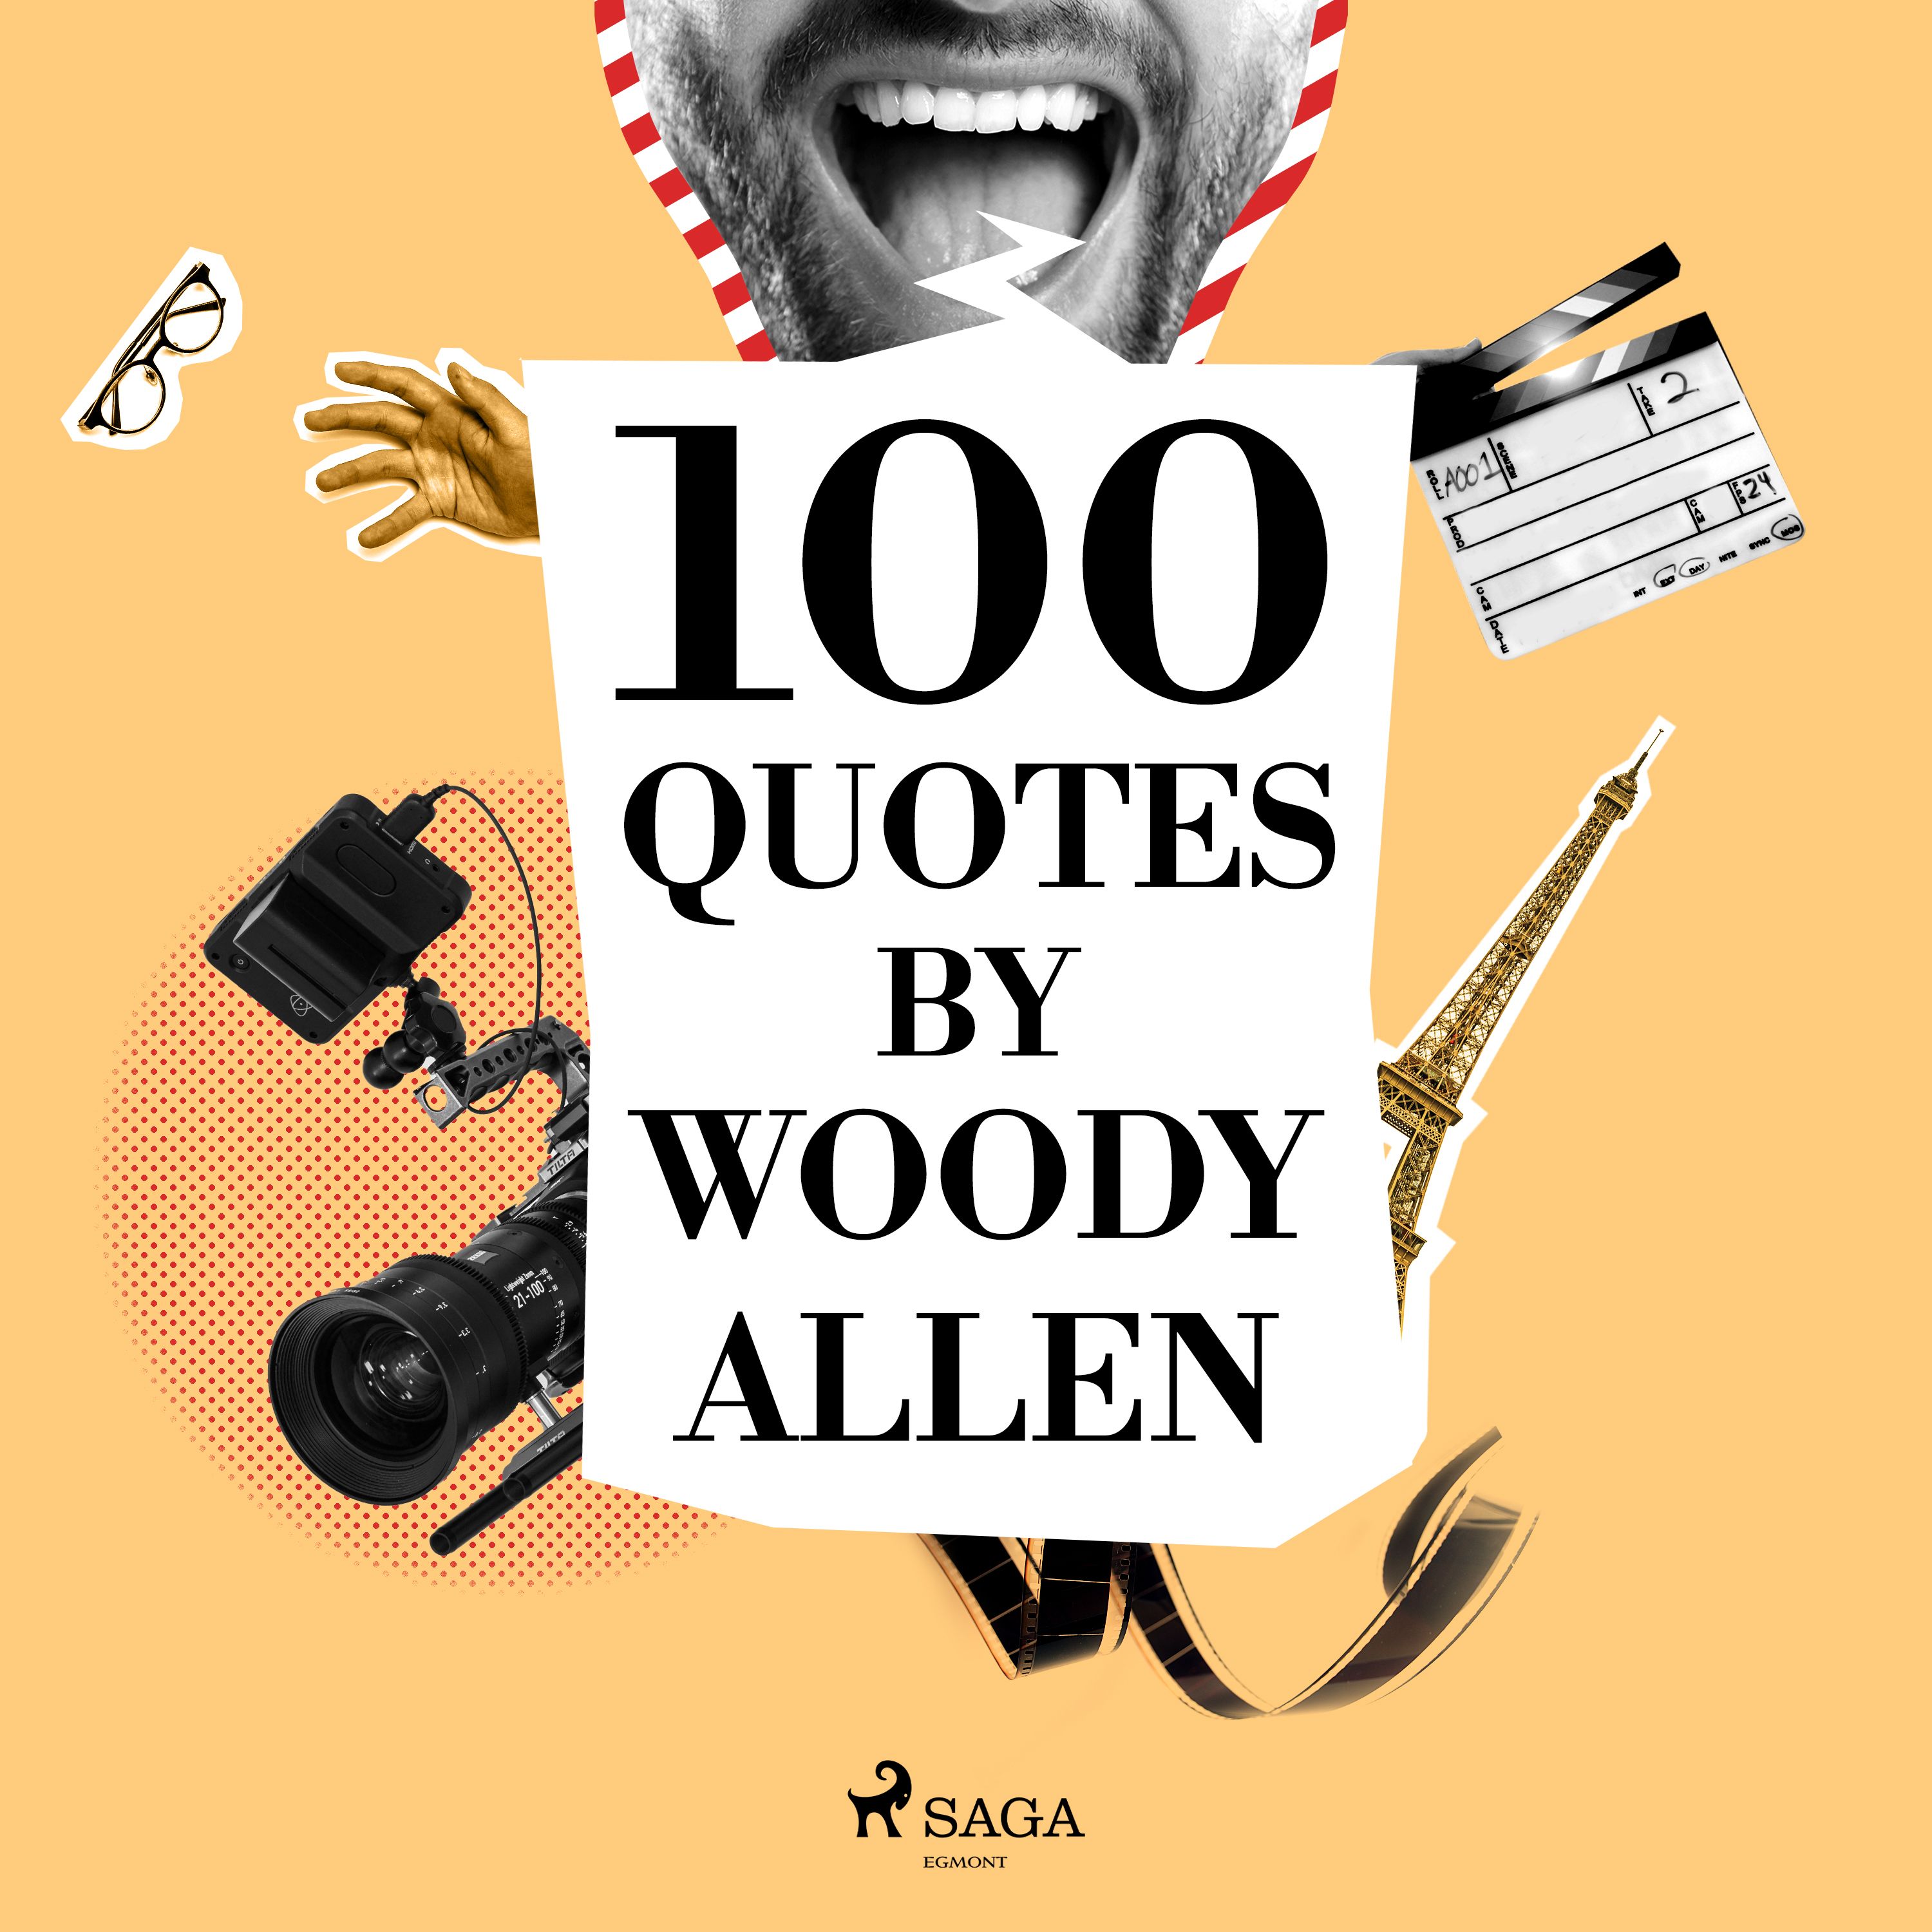 100 Quotes by Woody Allen, audiobook by Woody Allen